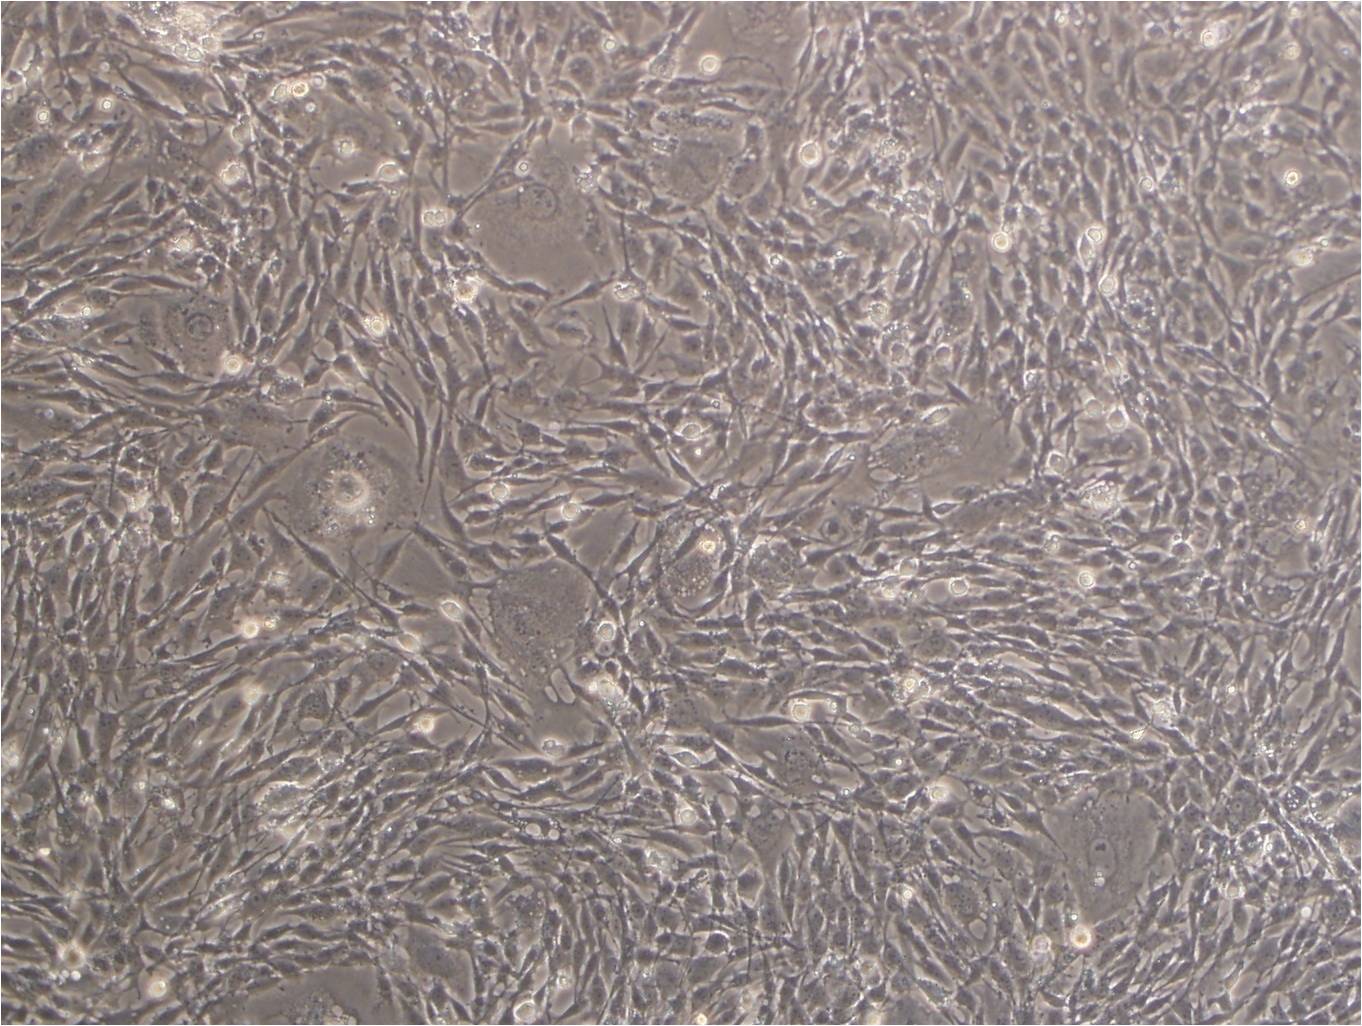 SKO-007 cell line人多发性骨髓瘤细胞系,SKO-007 cell line